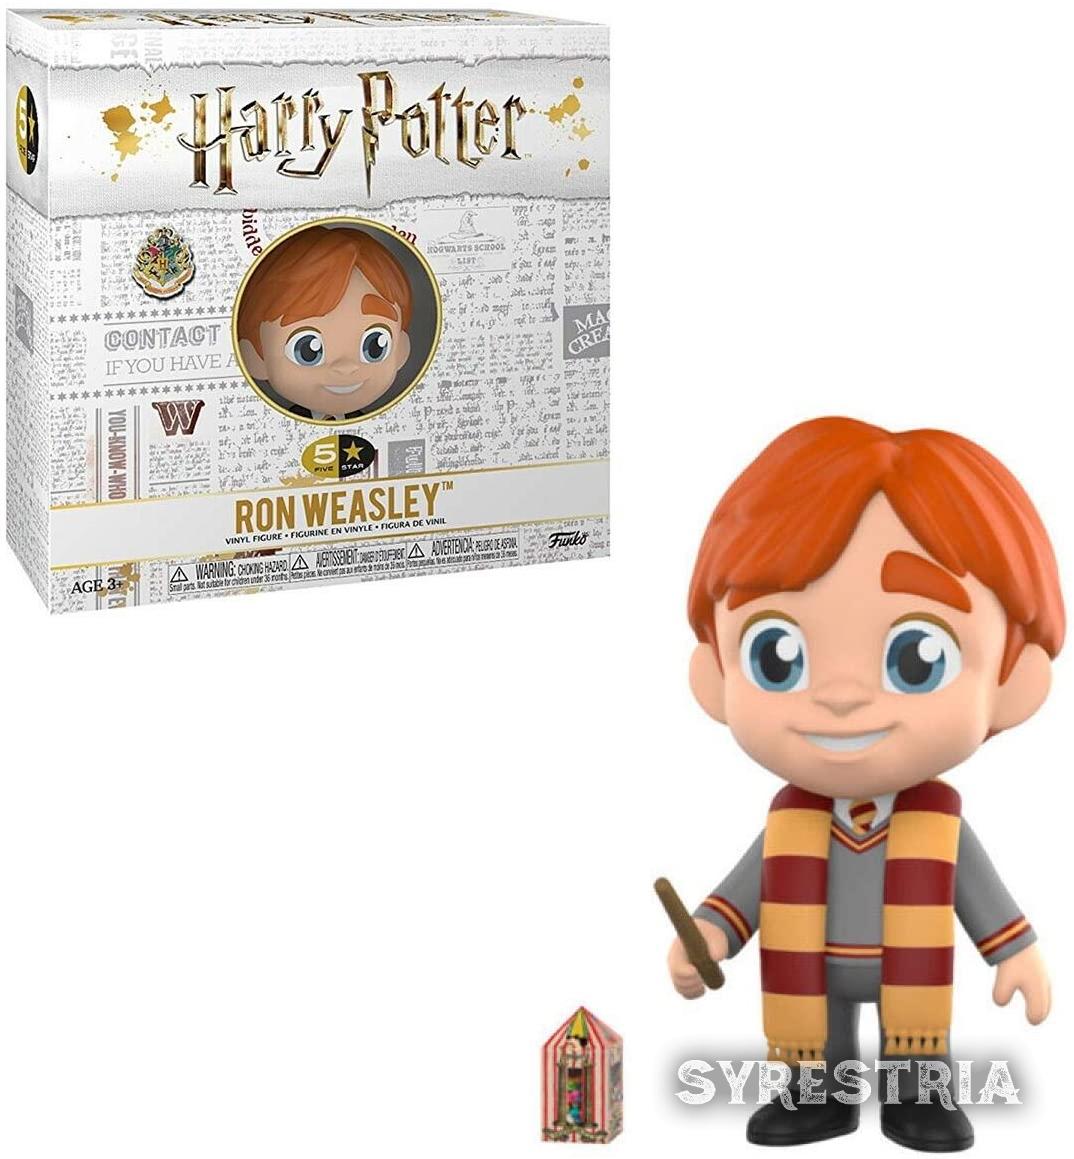 Harry Potter - Ron Weasley  - Funko 5 Five Star - Vinyl Figure